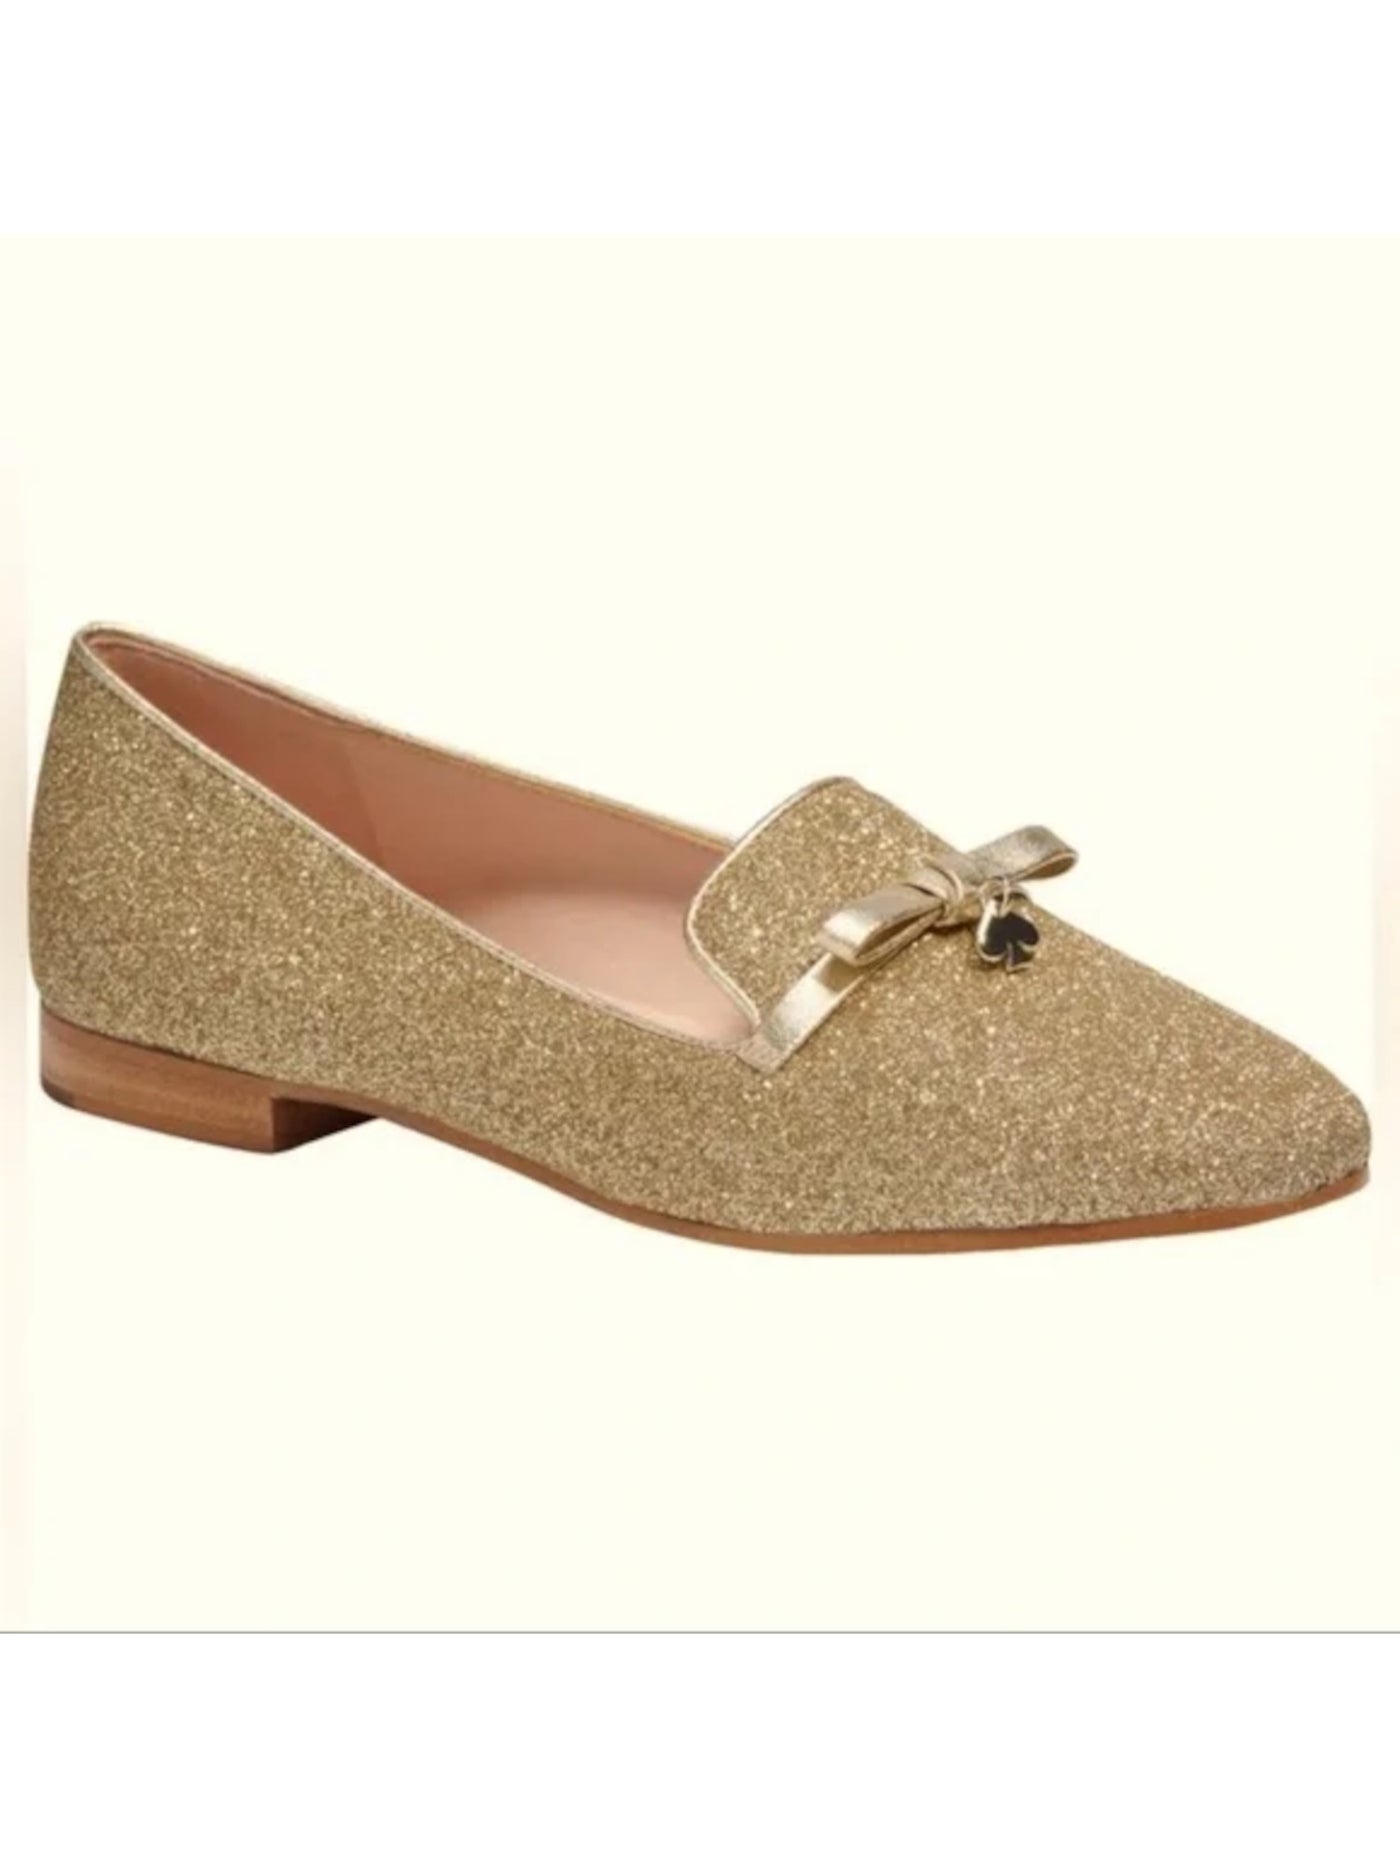 KATE SPADE NEW YORK Womens Gold Glitter Georgia Round Toe Block Heel Slip On Dress Loafers Shoes 11 B